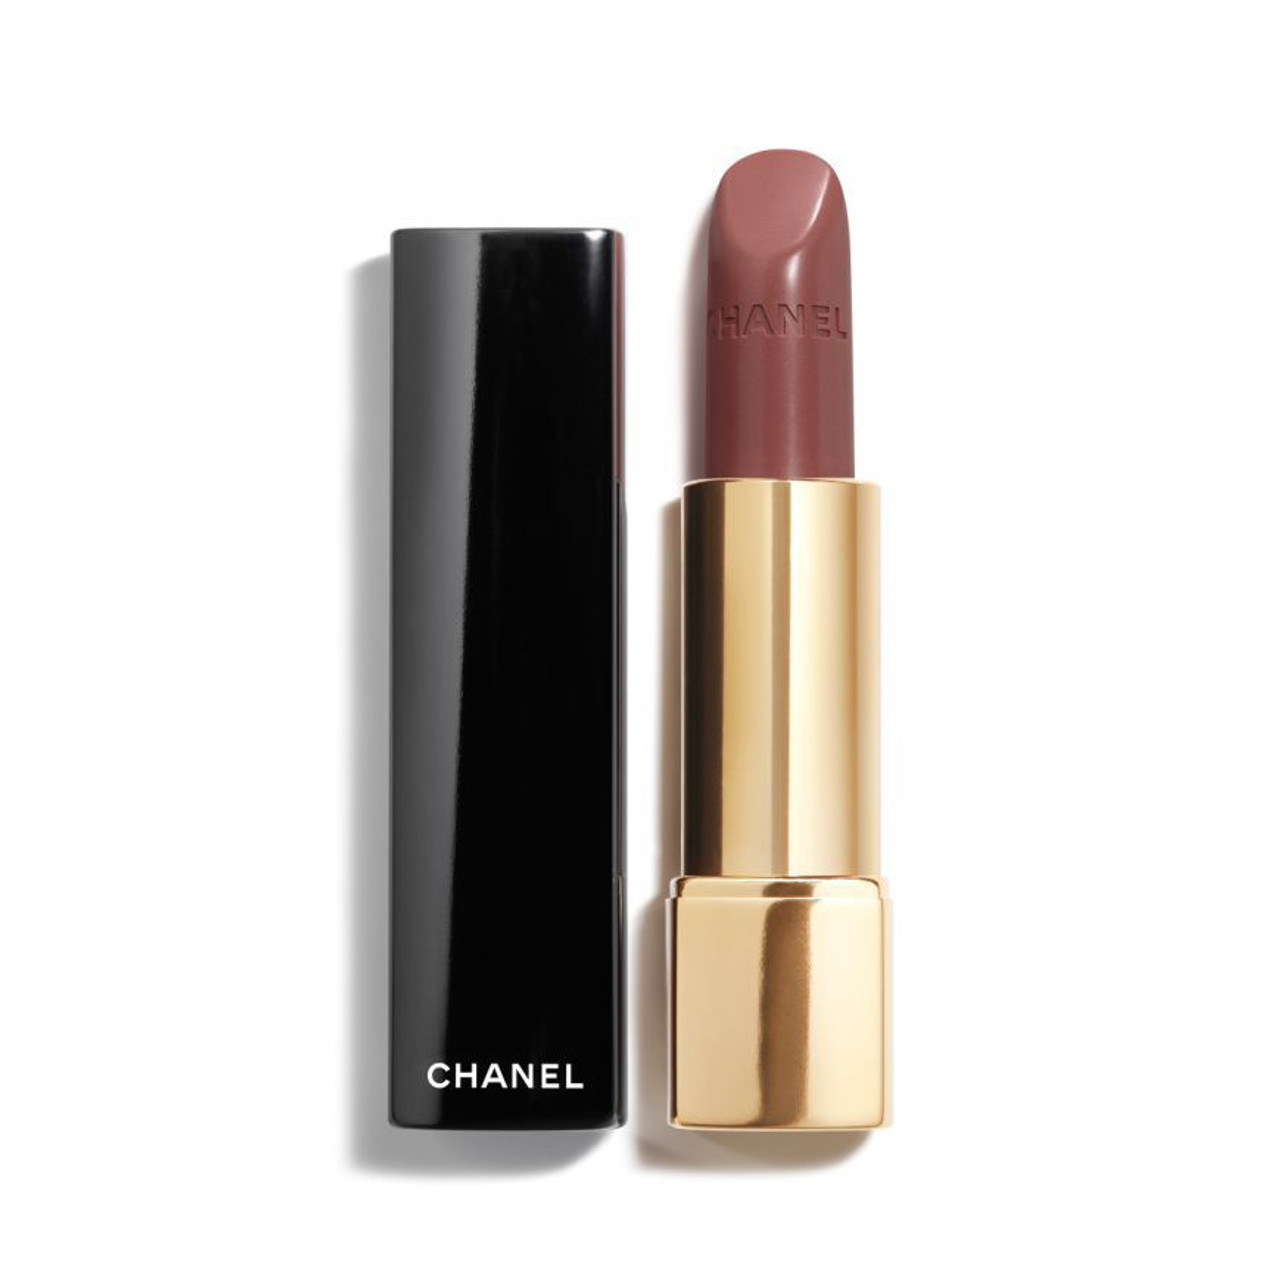 Chanel Coco Mademoiselle Eau De Parfum Spray 50ml/1.7oz 